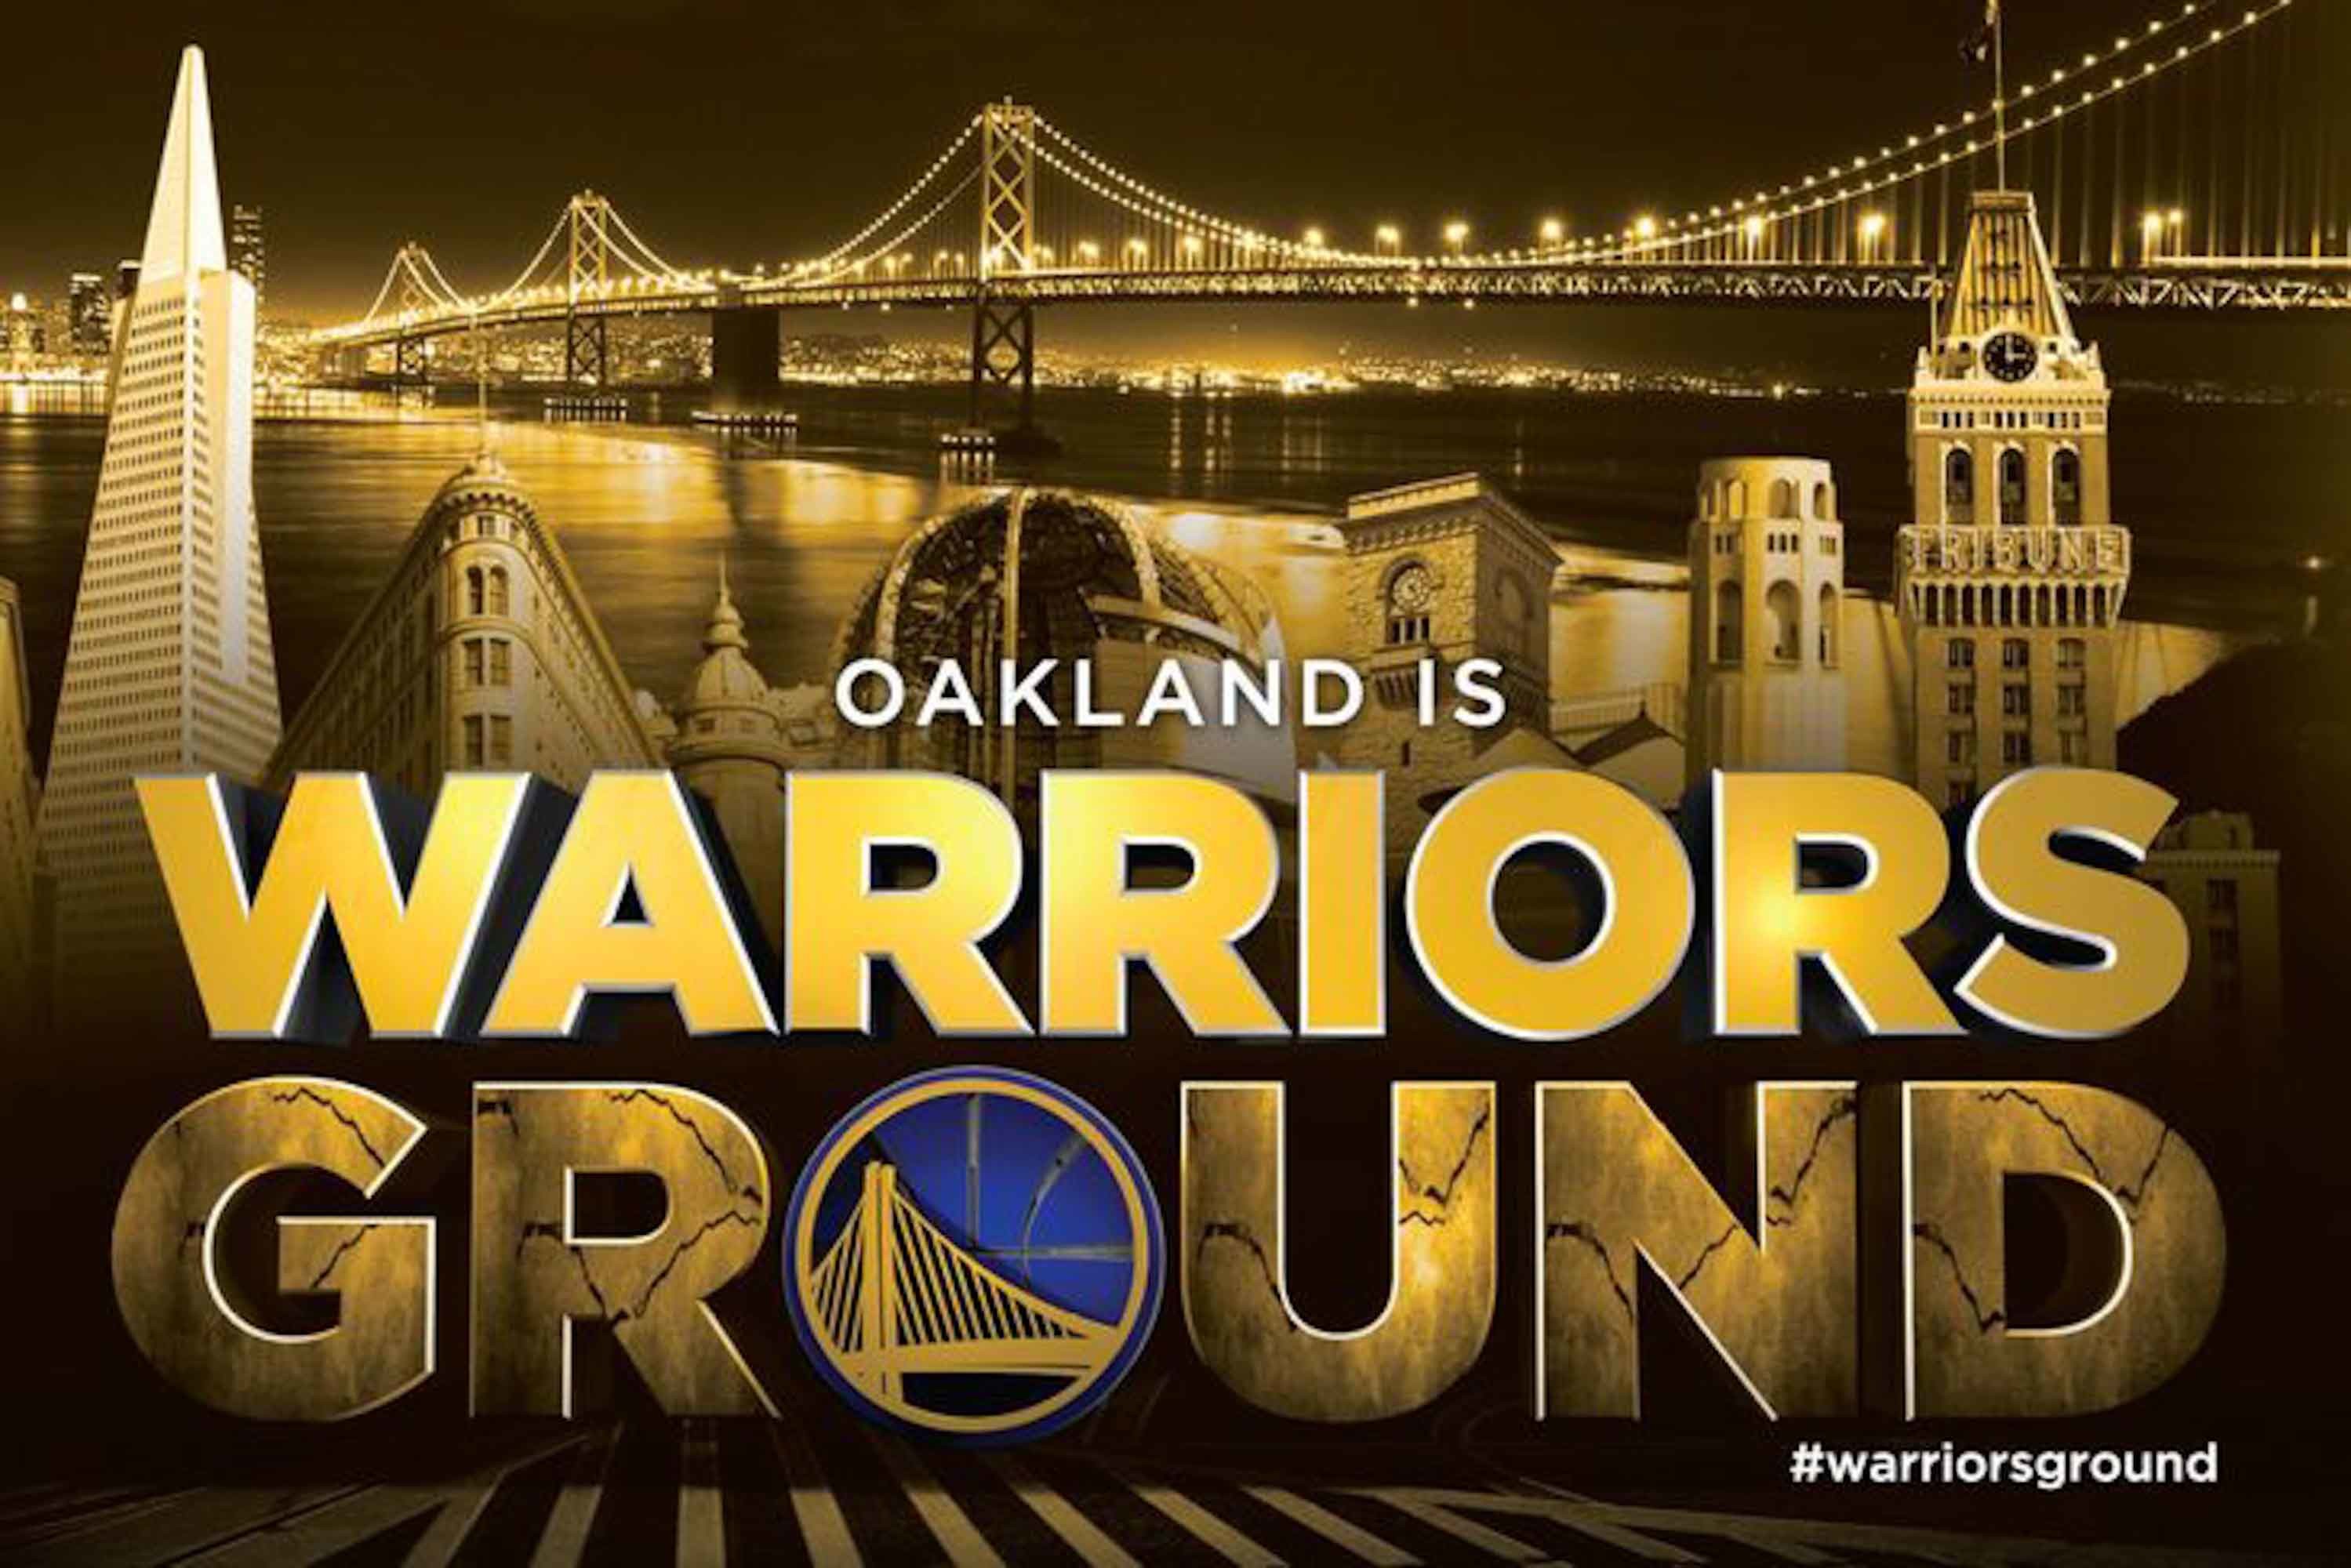 2998x2000 Warriors win Game 7: Will face Cavaliers in NBA Finals - Golden ... Golden  State Warriors Strength in Numbers - wallpaper.